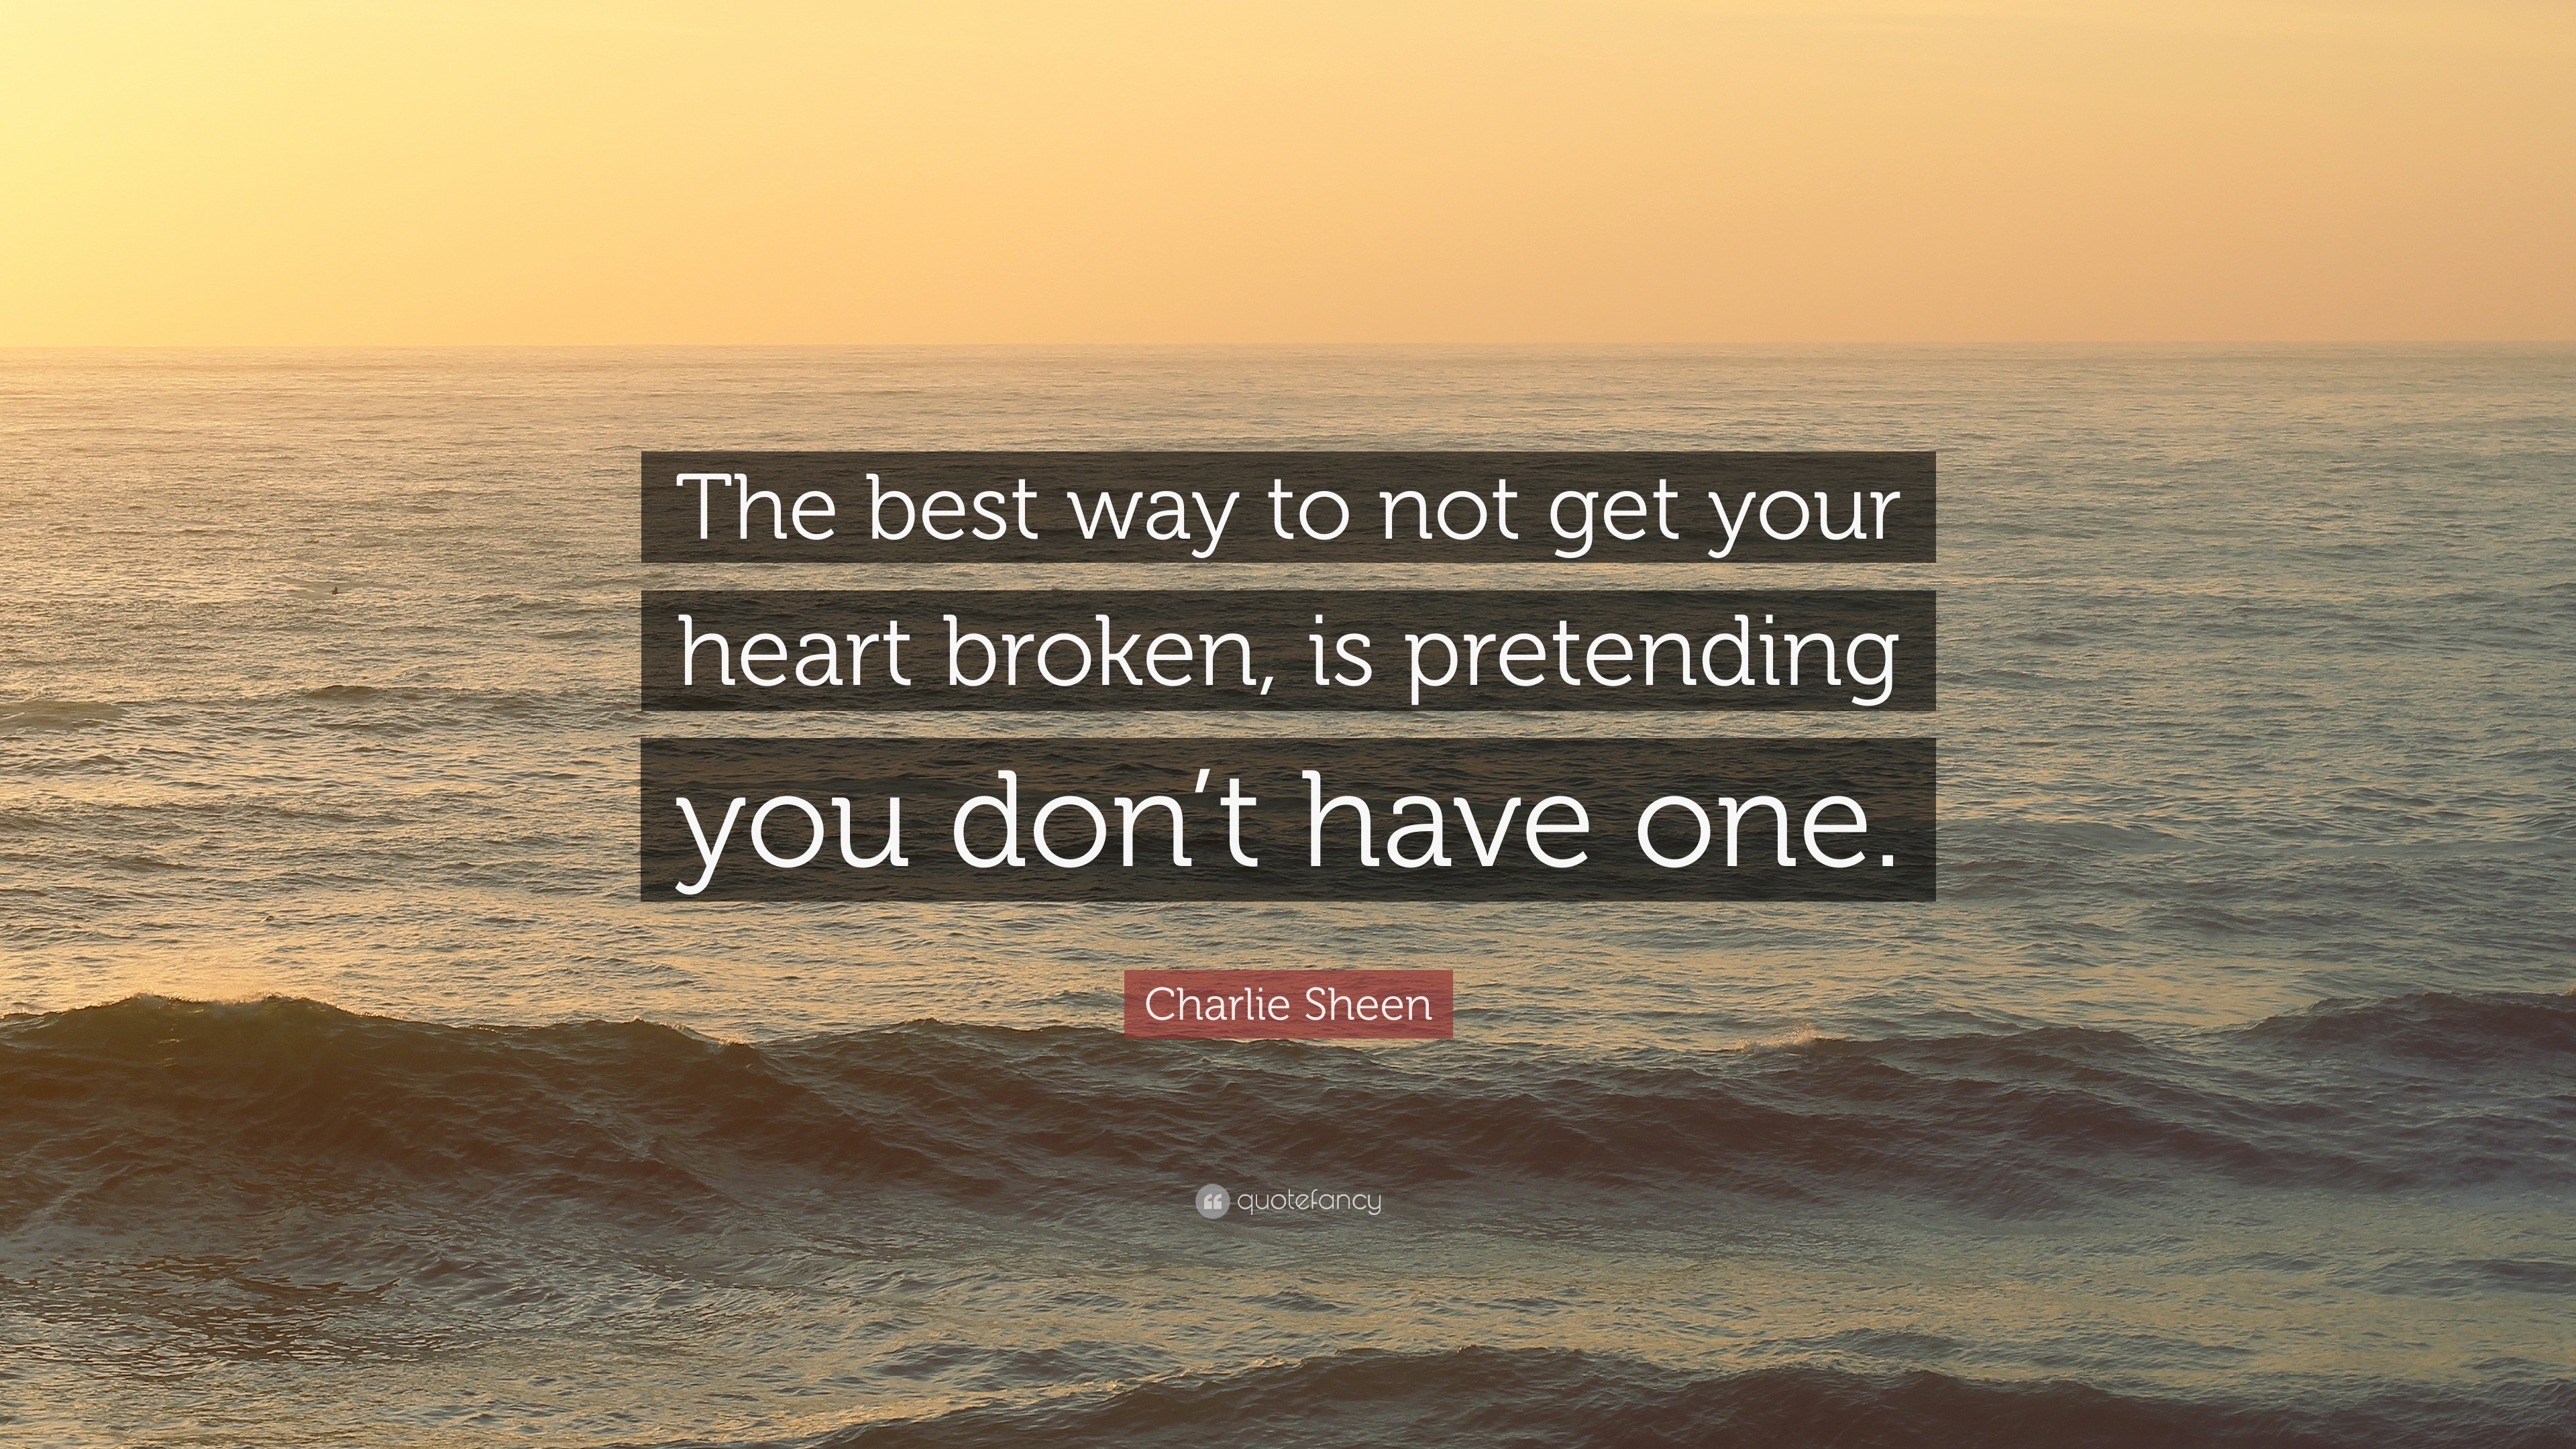 3840x2160 Charlie Sheen Quote: “The best way to not get your heart broken, is